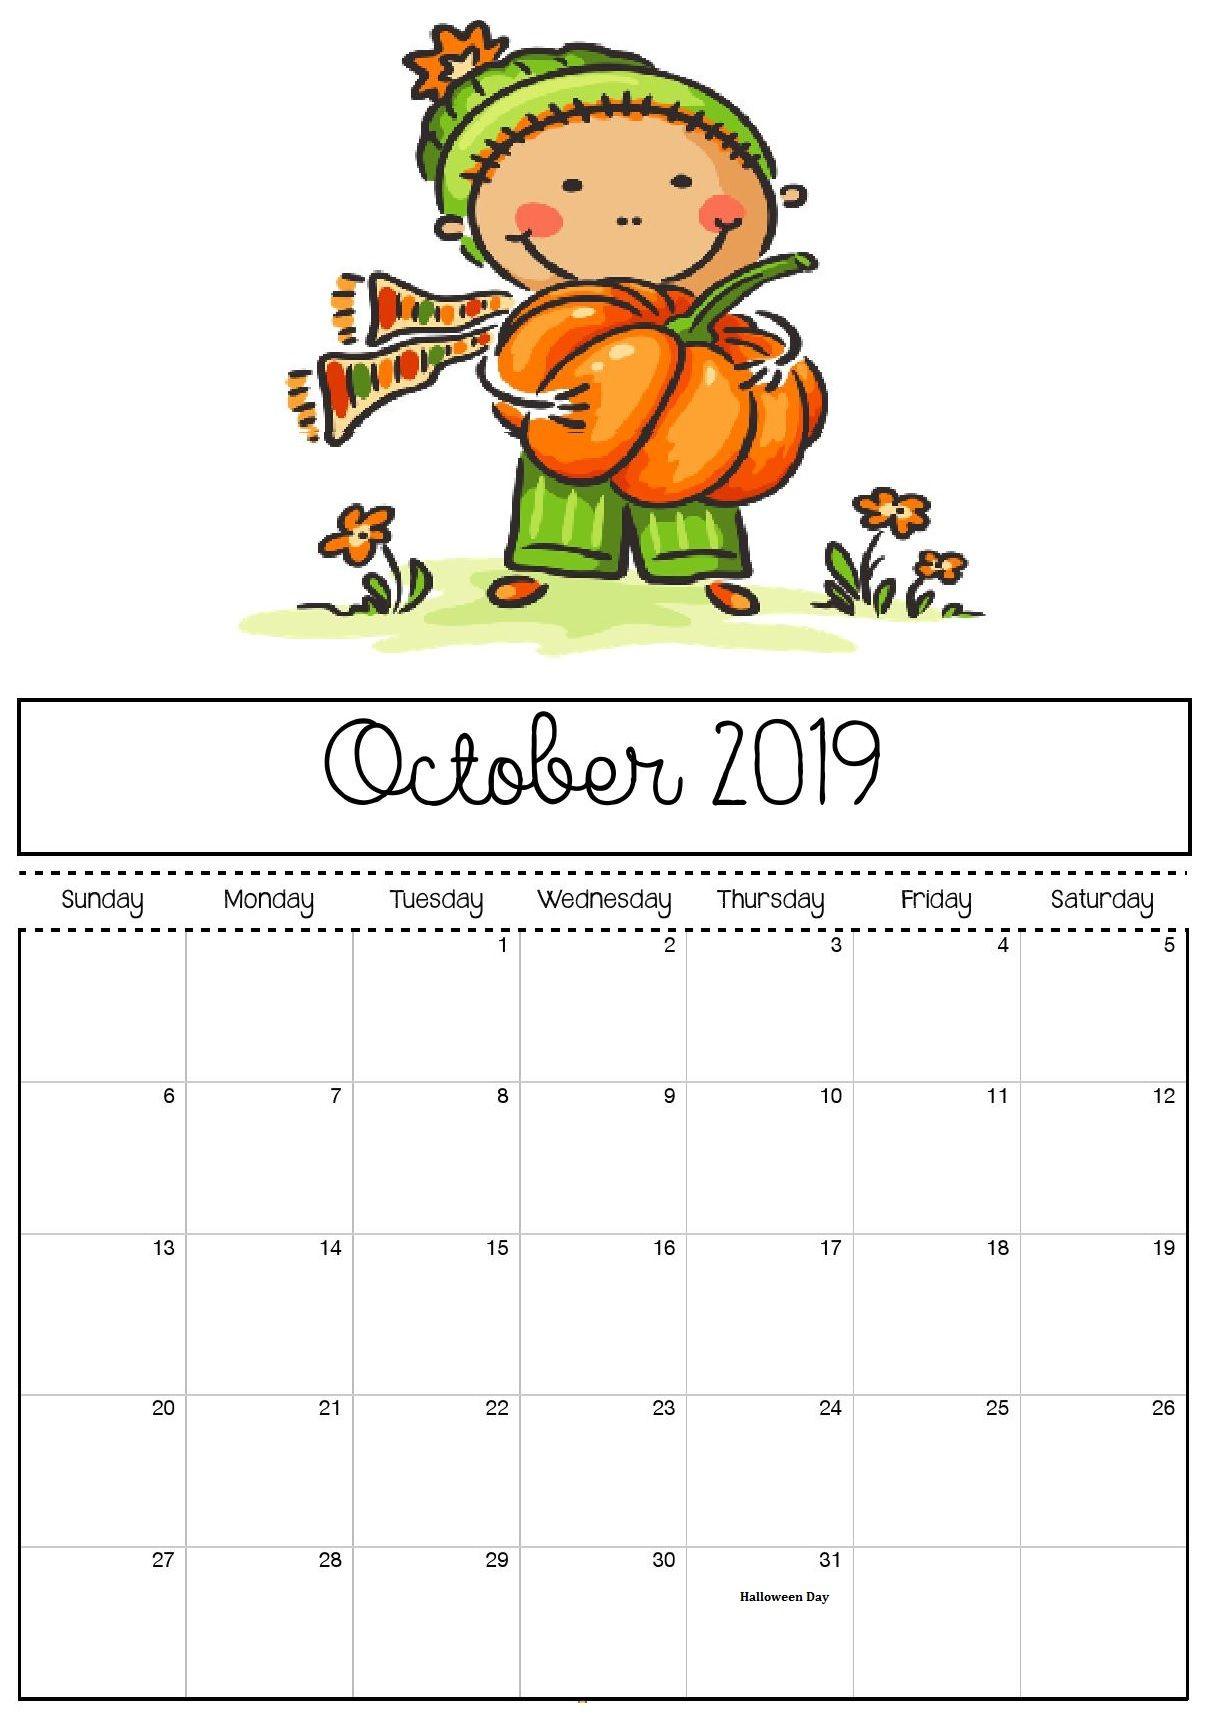 October 2019 Halloween Calendar